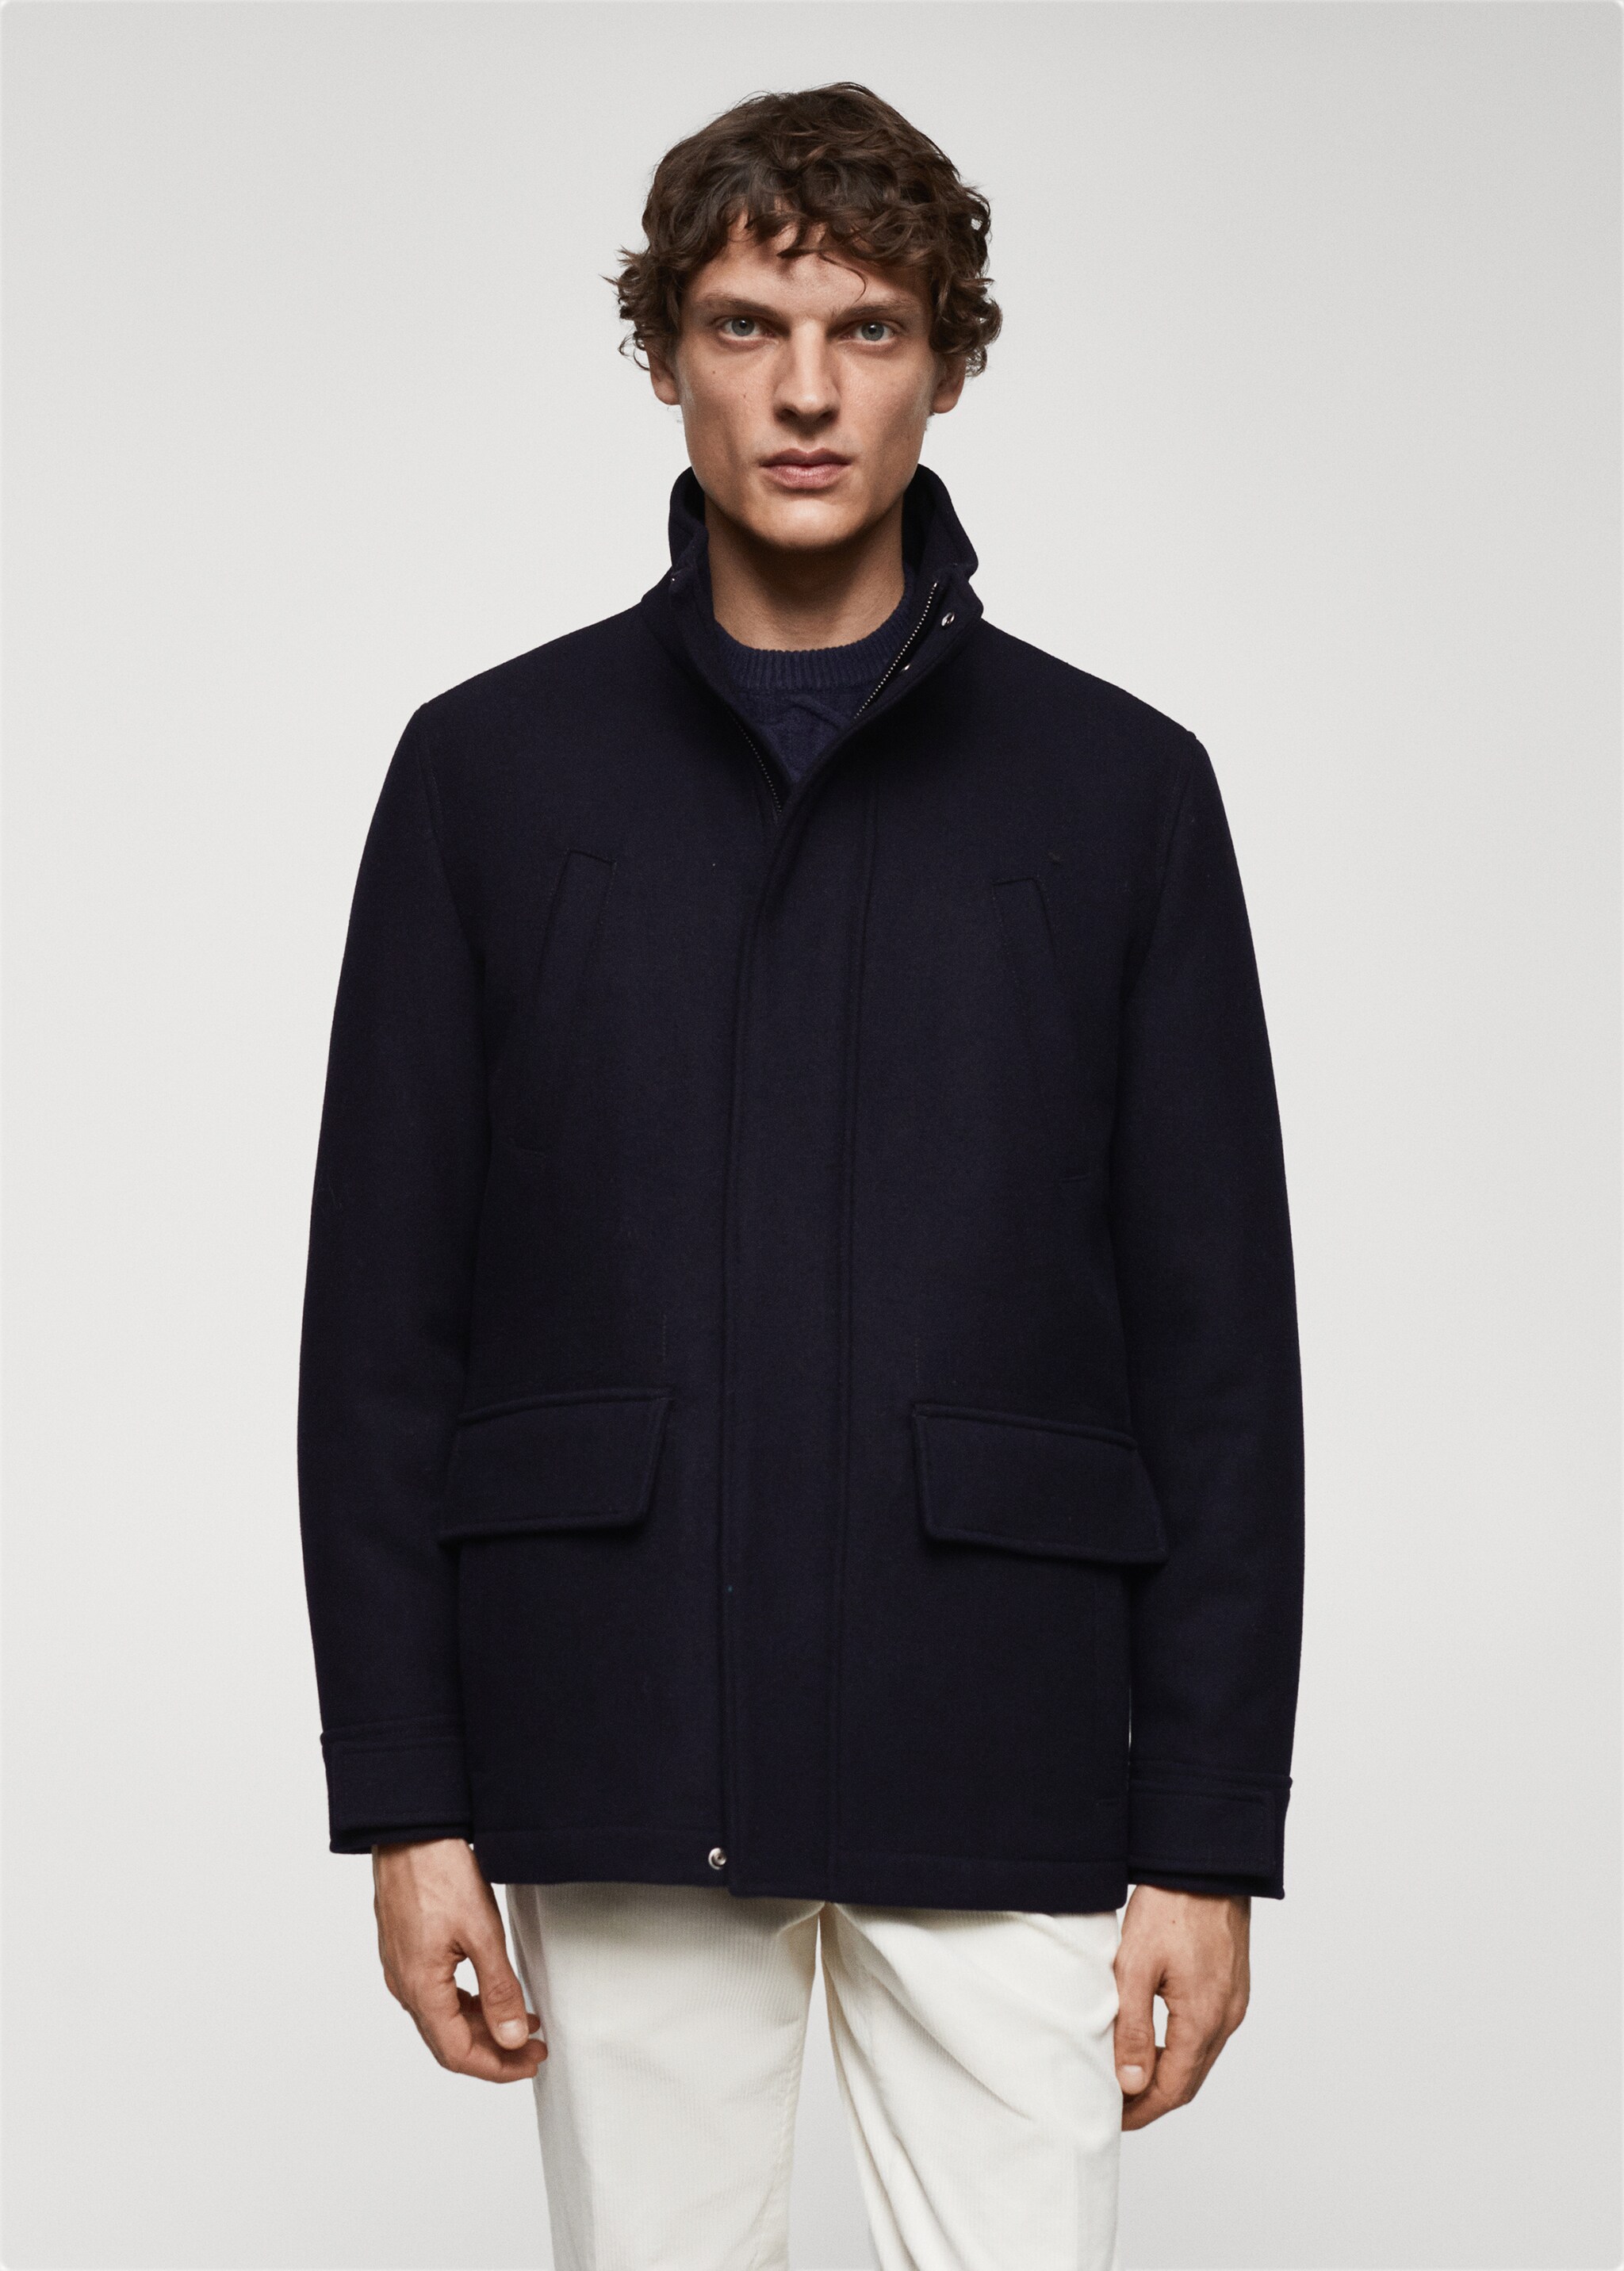 Short wool coat with pockets - Medium plane